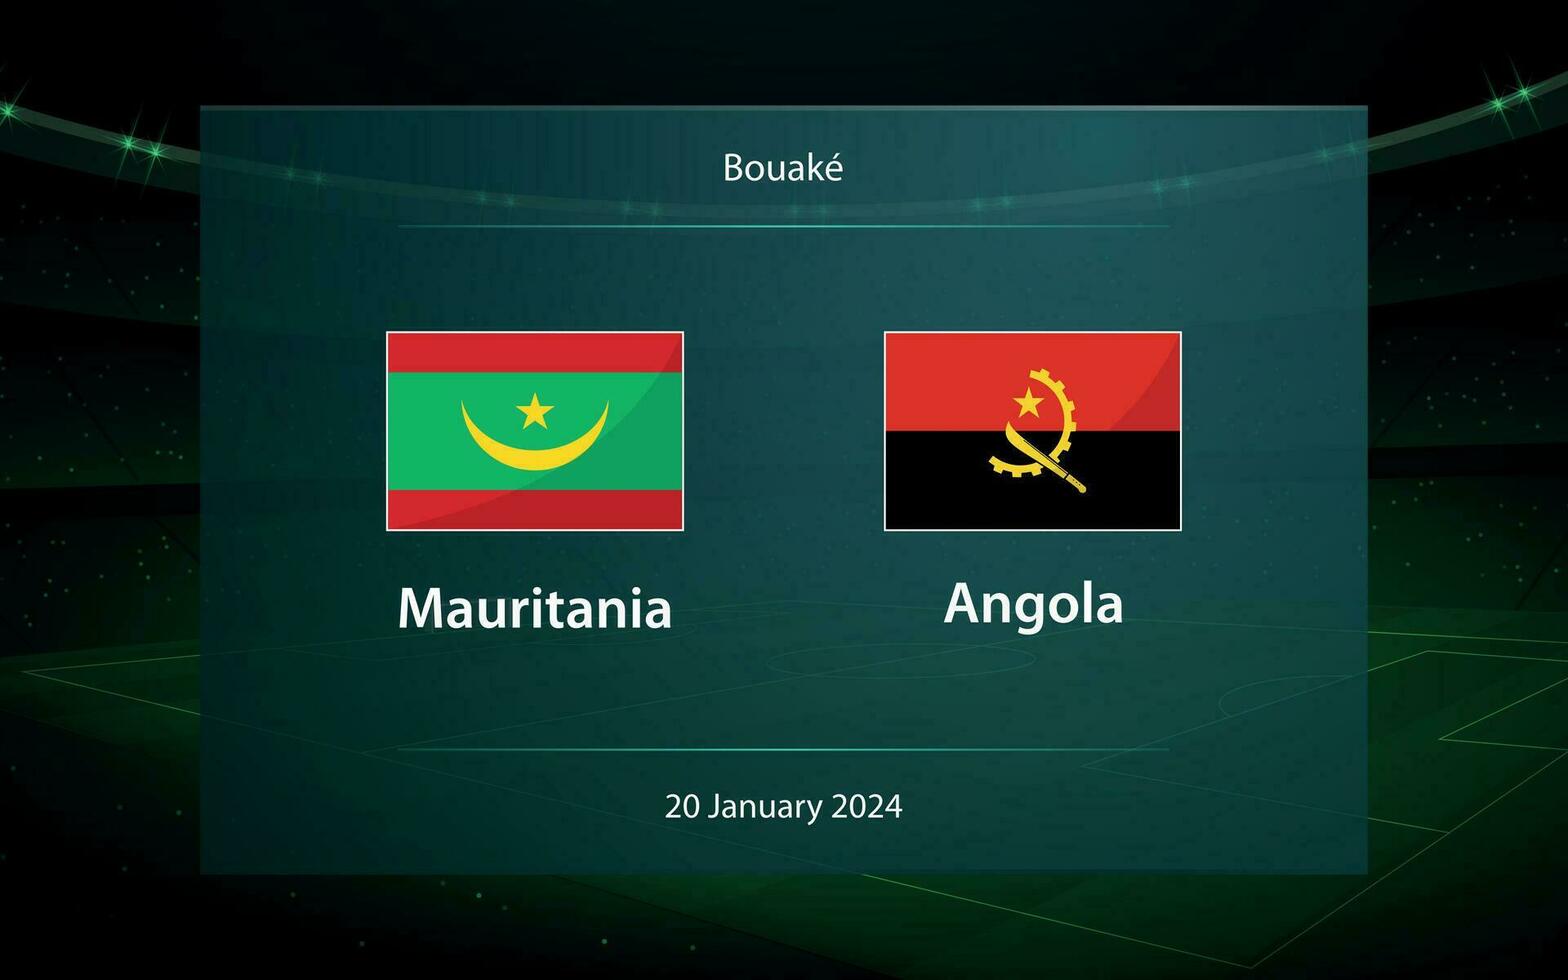 Mauritania vs angola fútbol americano marcador transmitir gráfico vector